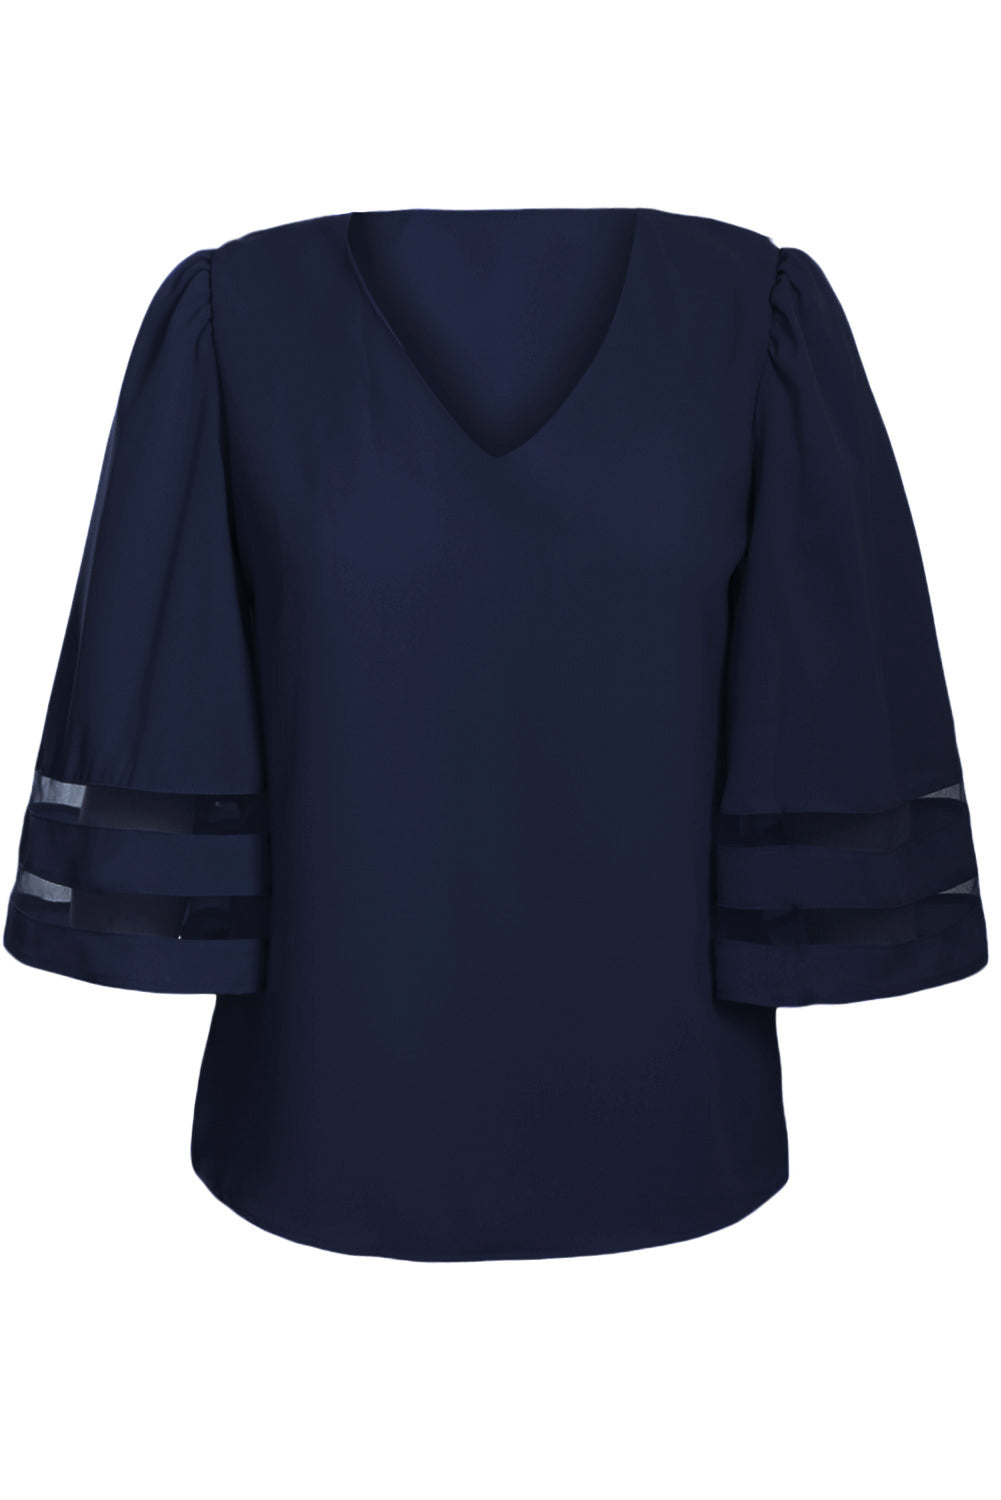 Navy Blue Flare Sleeve V Neck Loose Women's Chiffon Blouse MB251204-5 ...